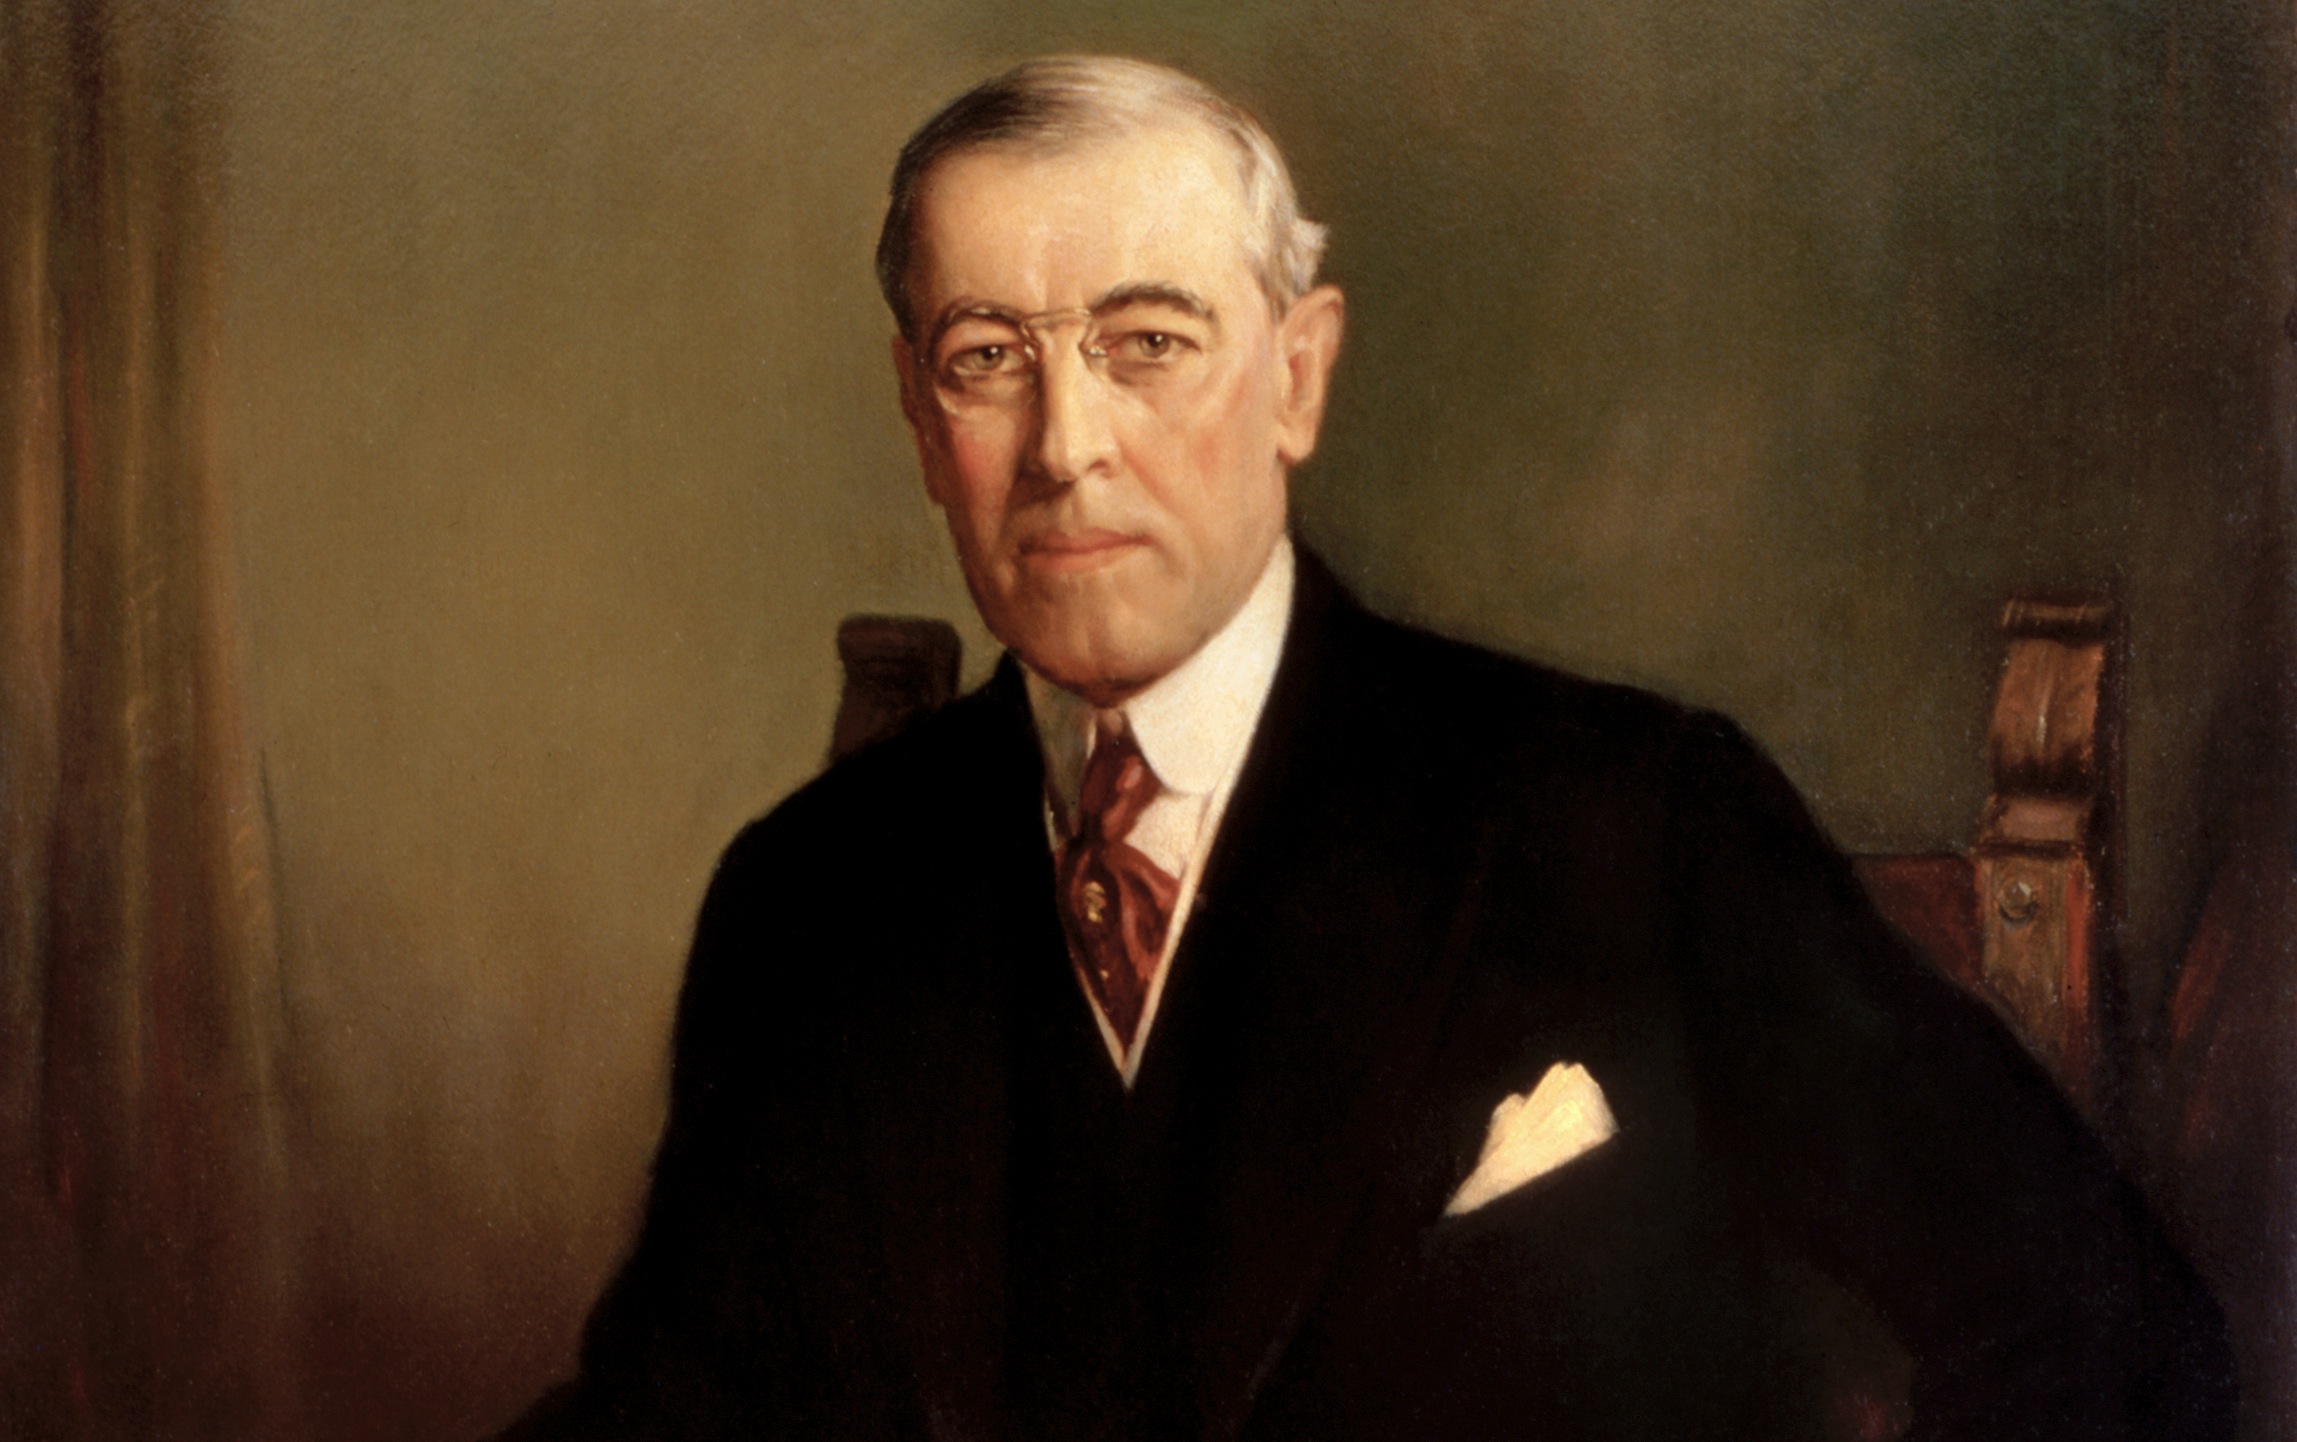 Historians rate Woodrow Wilson